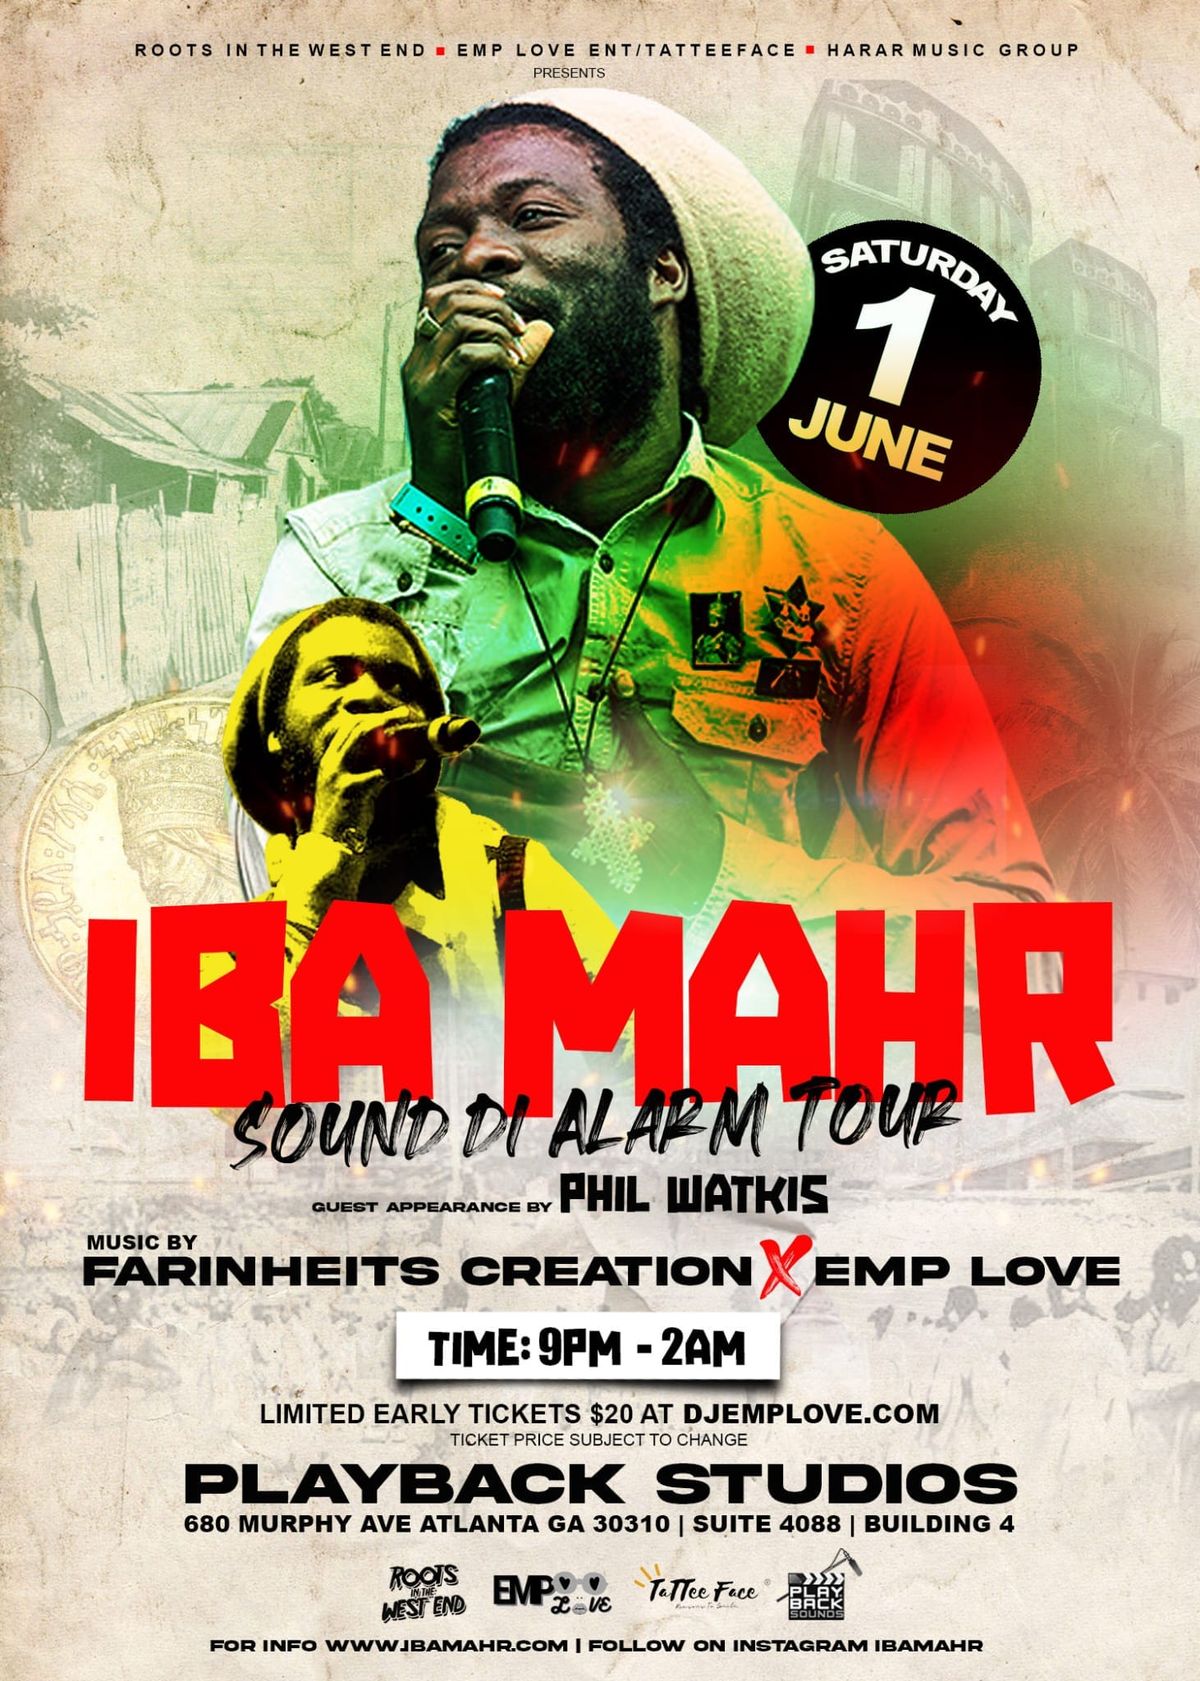 IBA MAHR: Sound Di Alarm Tour, ATLANTA